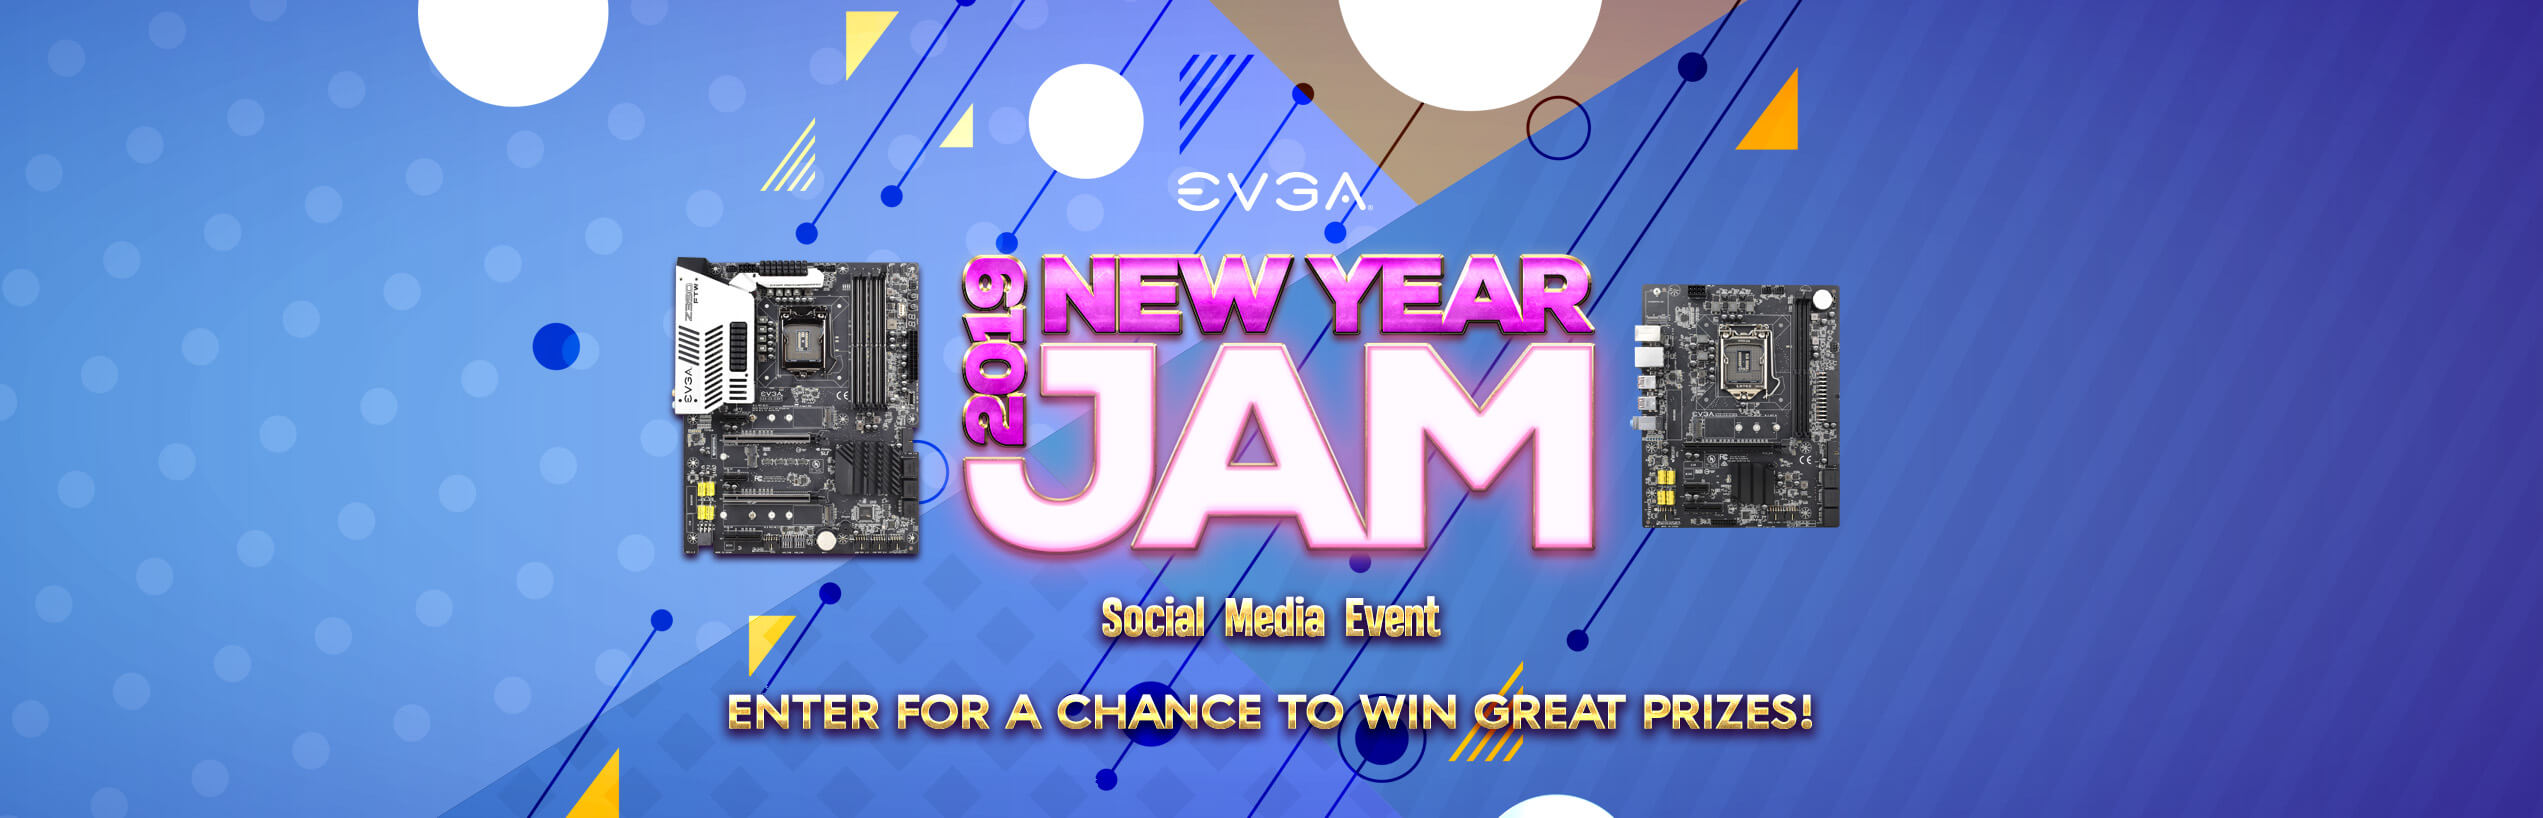 EVGA New Year's Jam Social Media Event